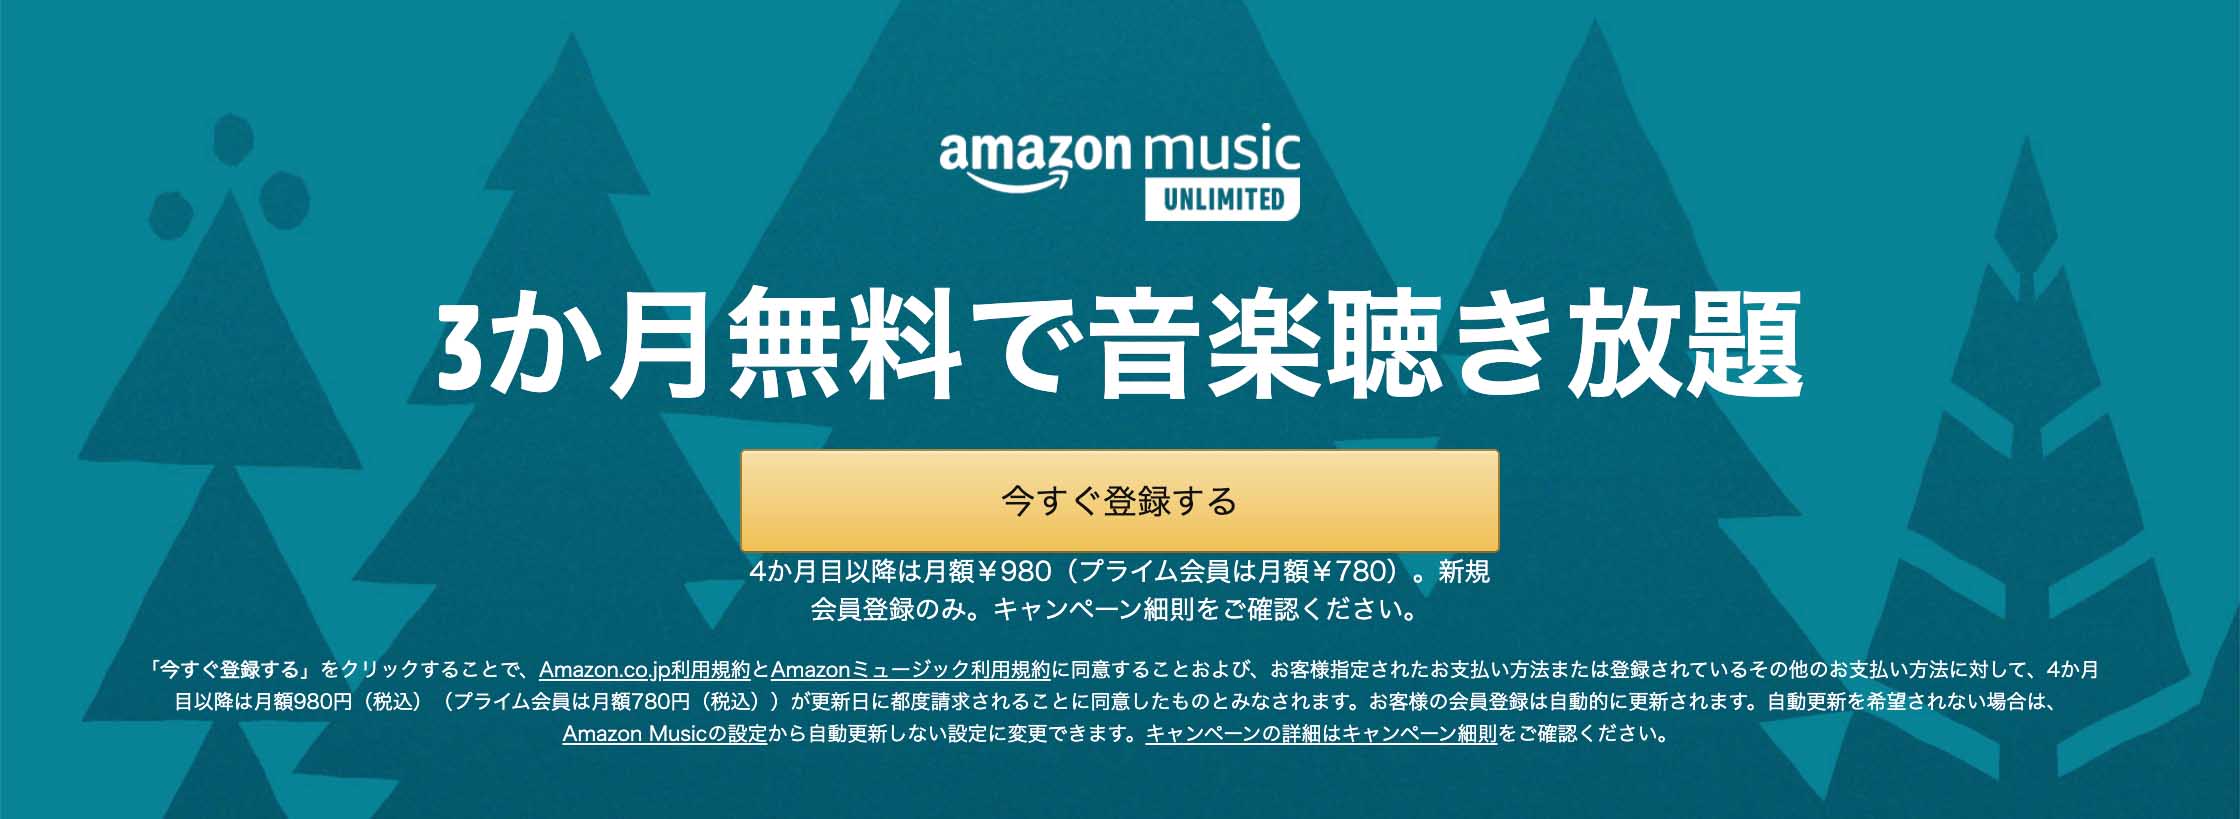 Amazon Music無料体験